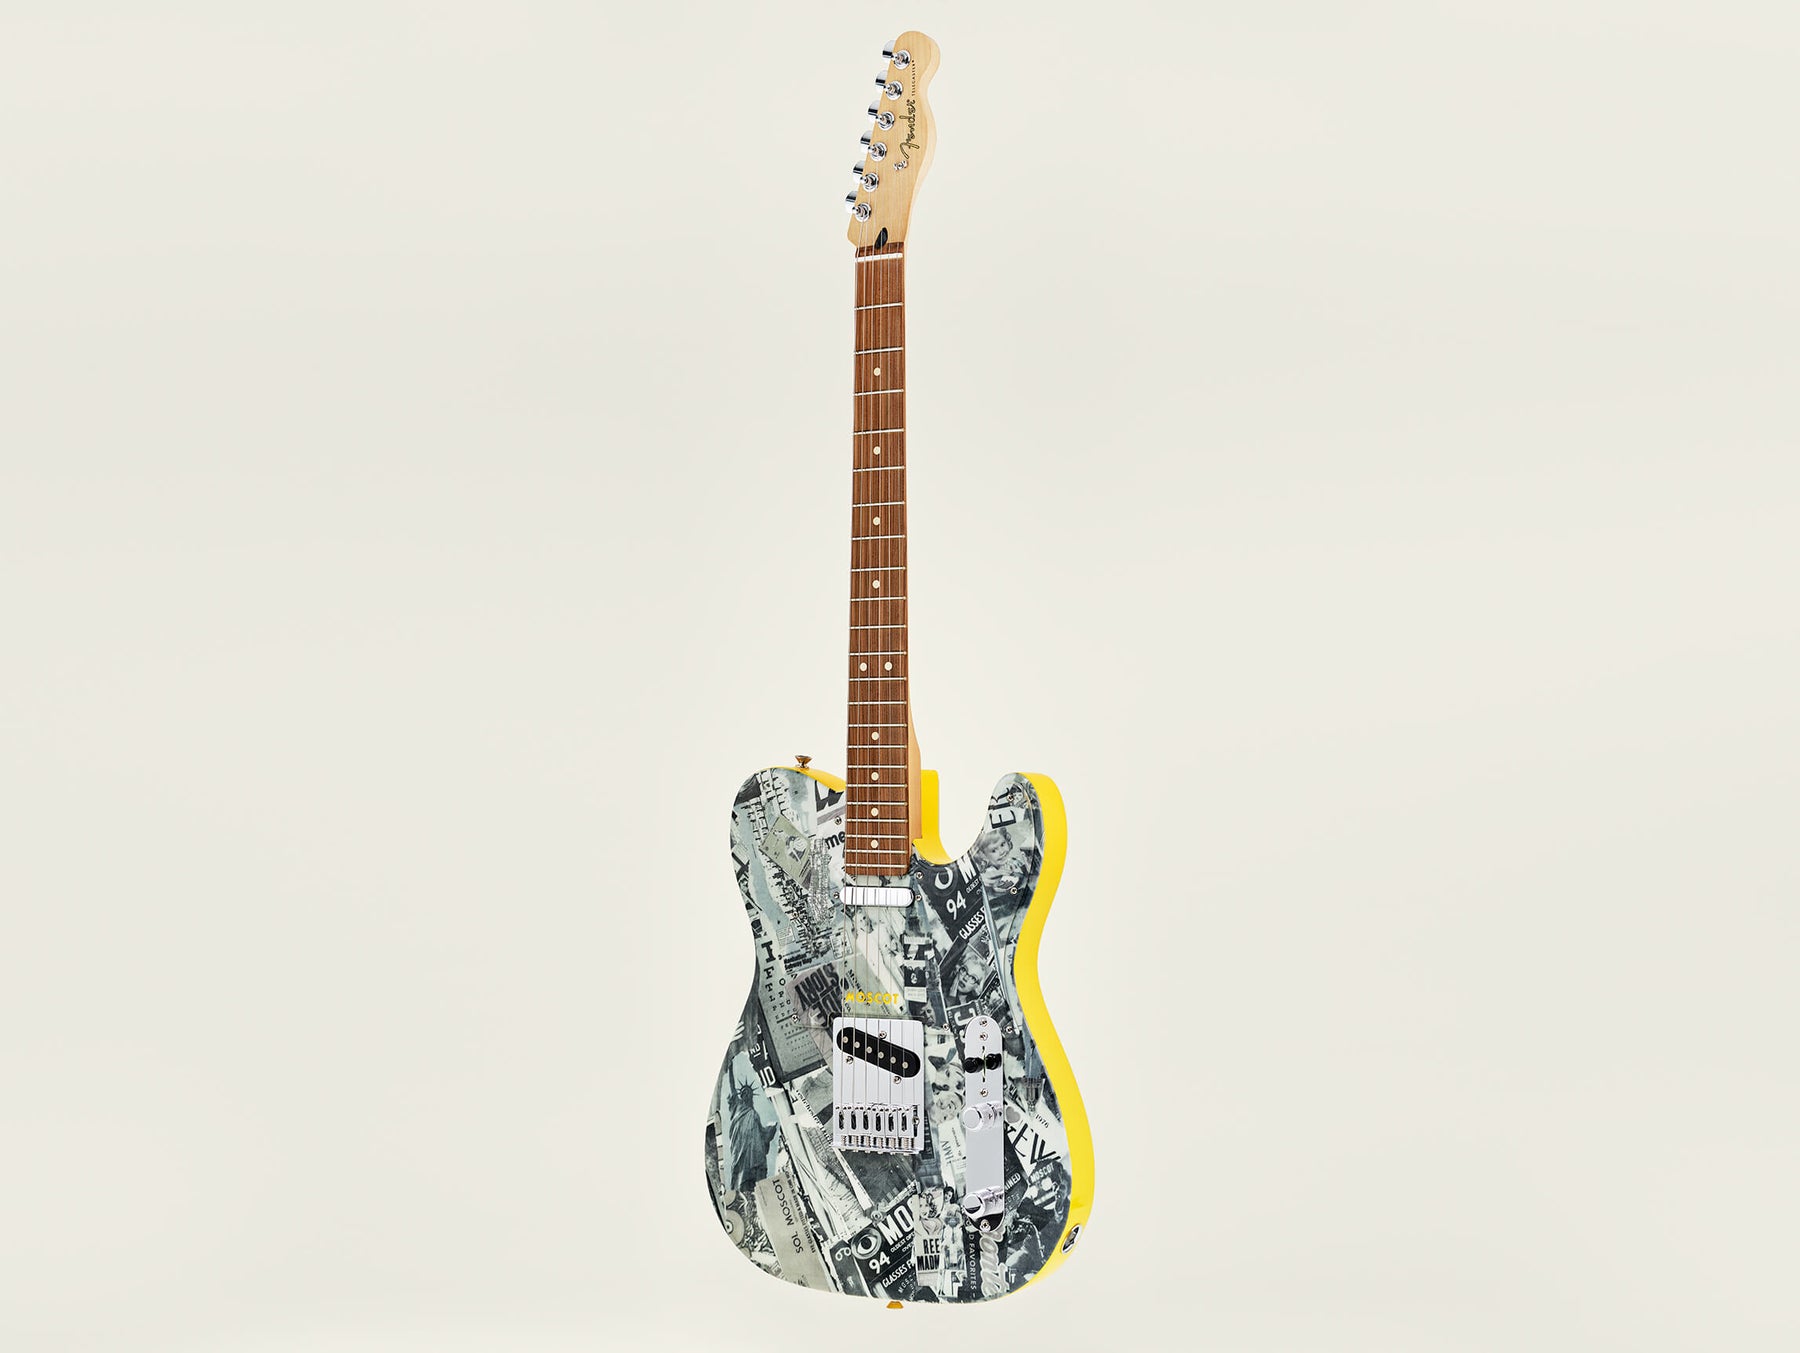 The MOSCOT Fender Guitar